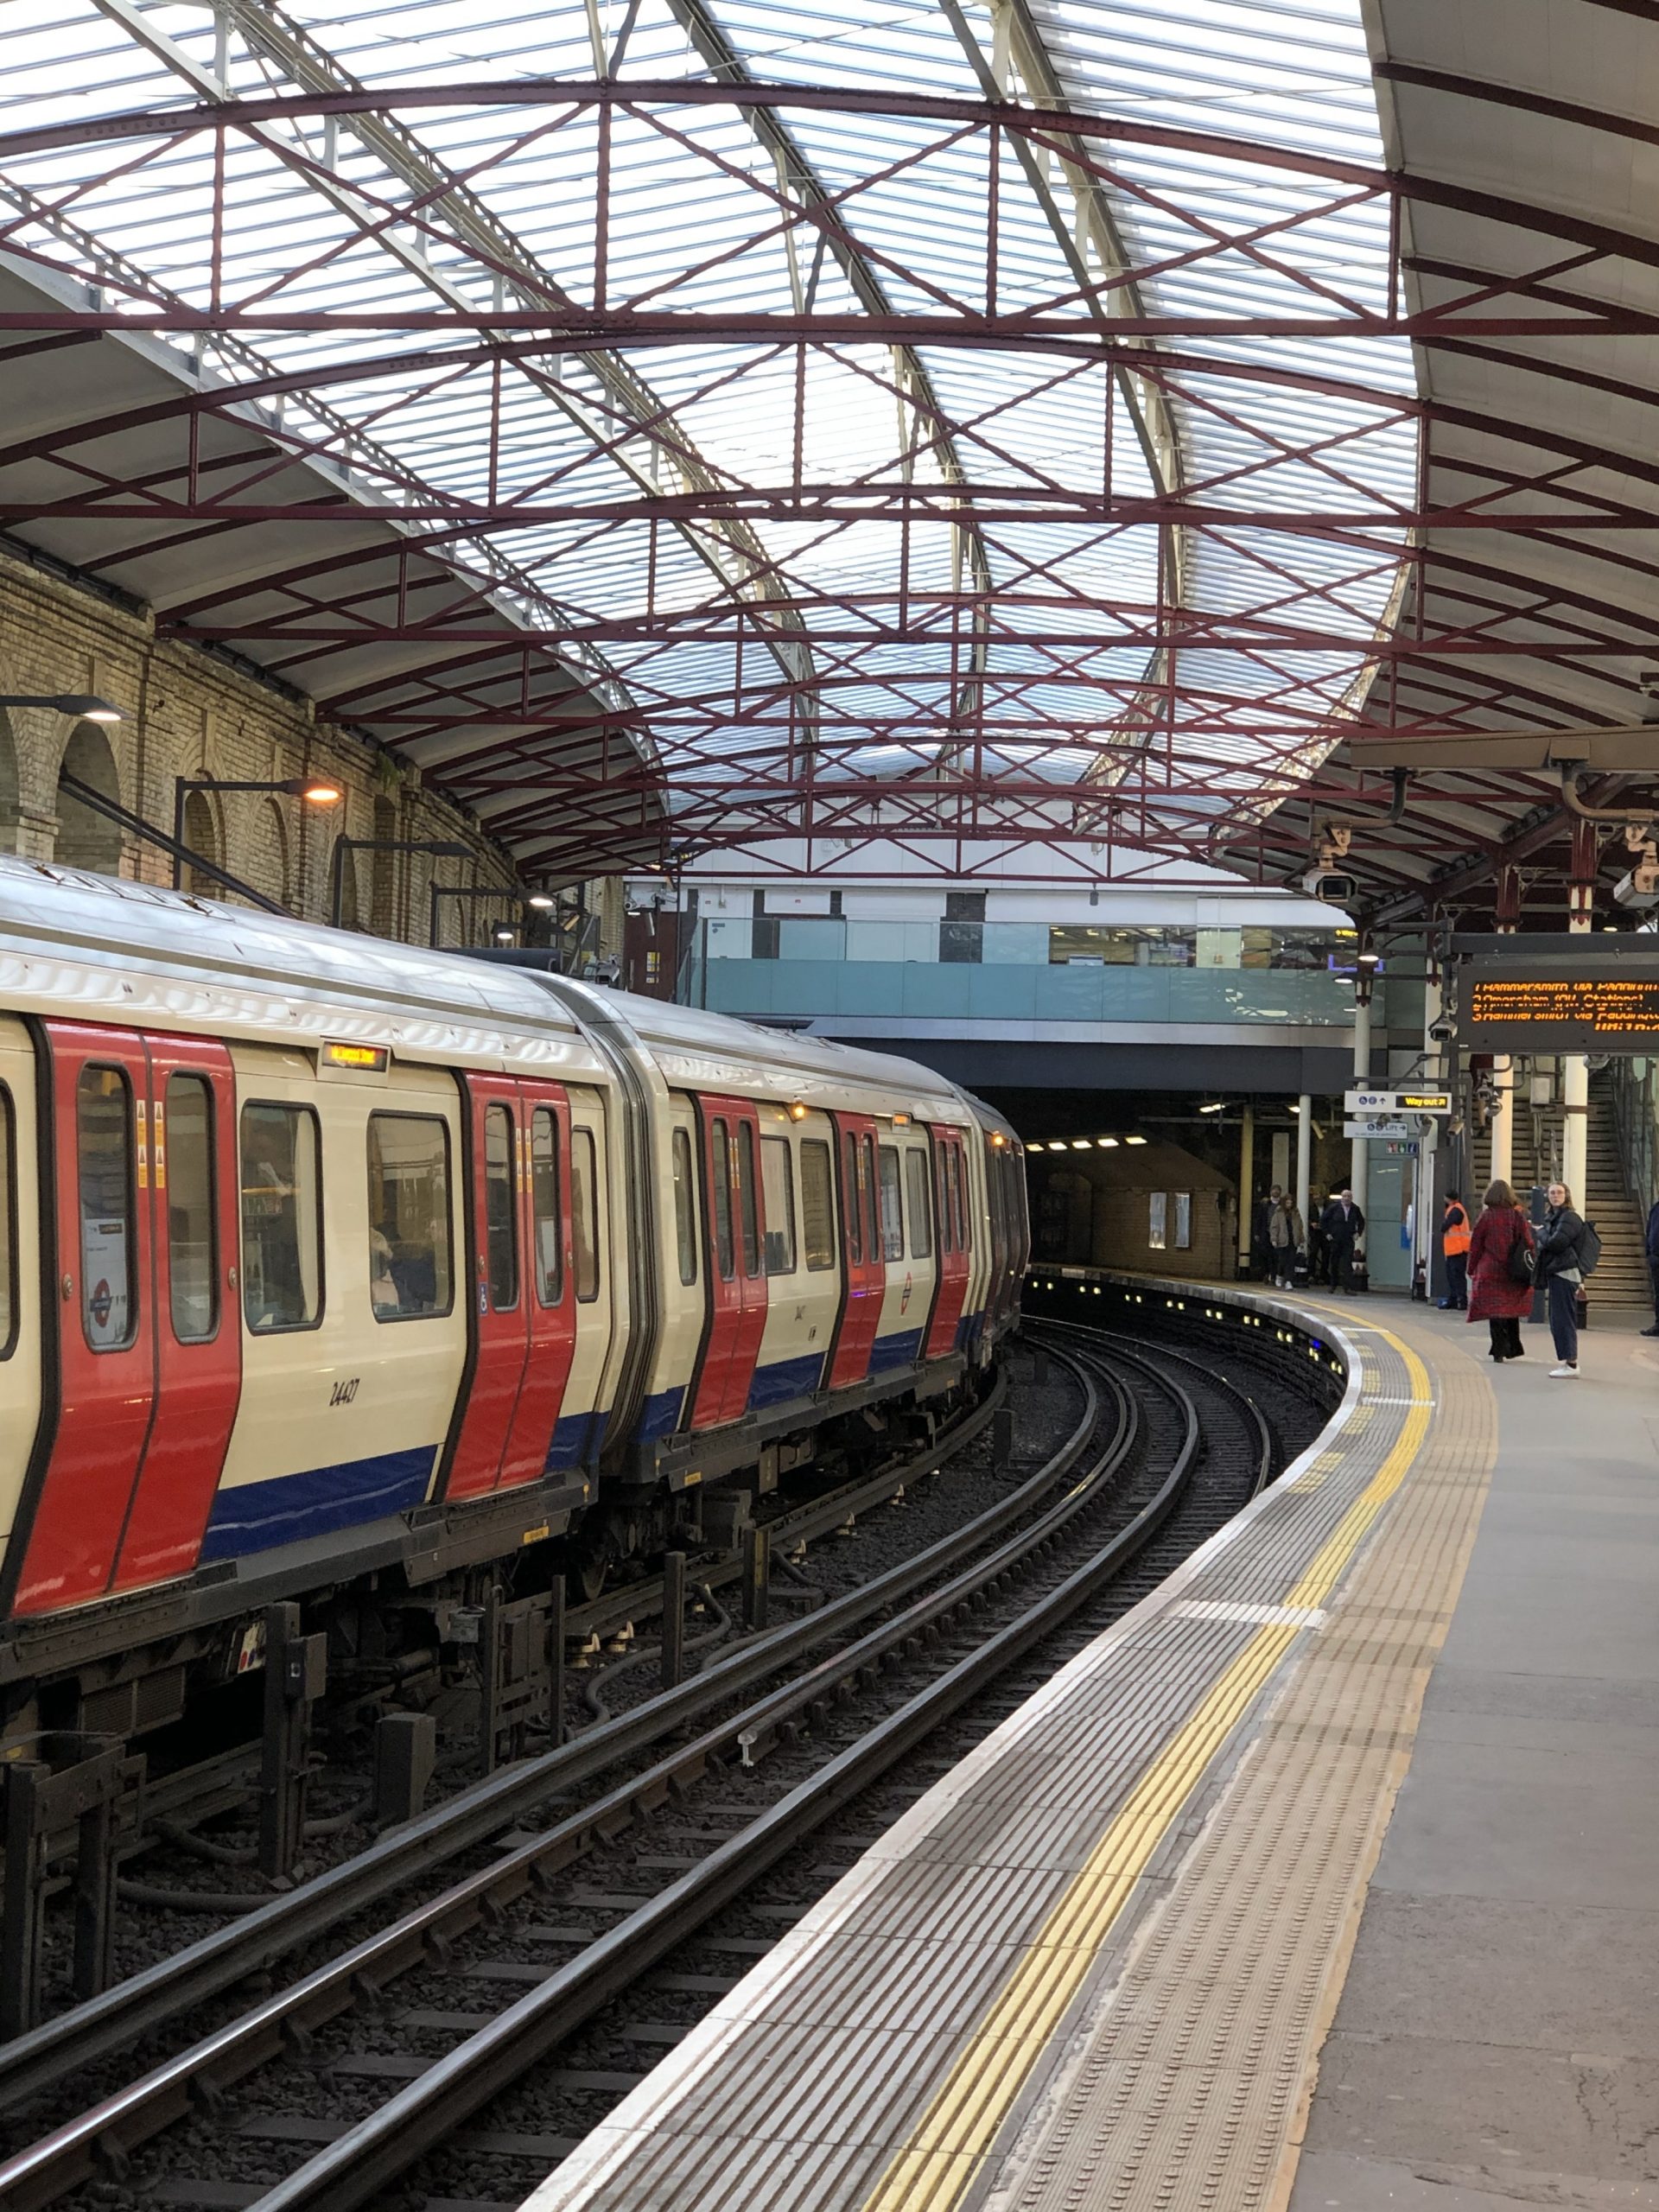 Coronavirus UK – Train passenger numbers fall as workers stay at home